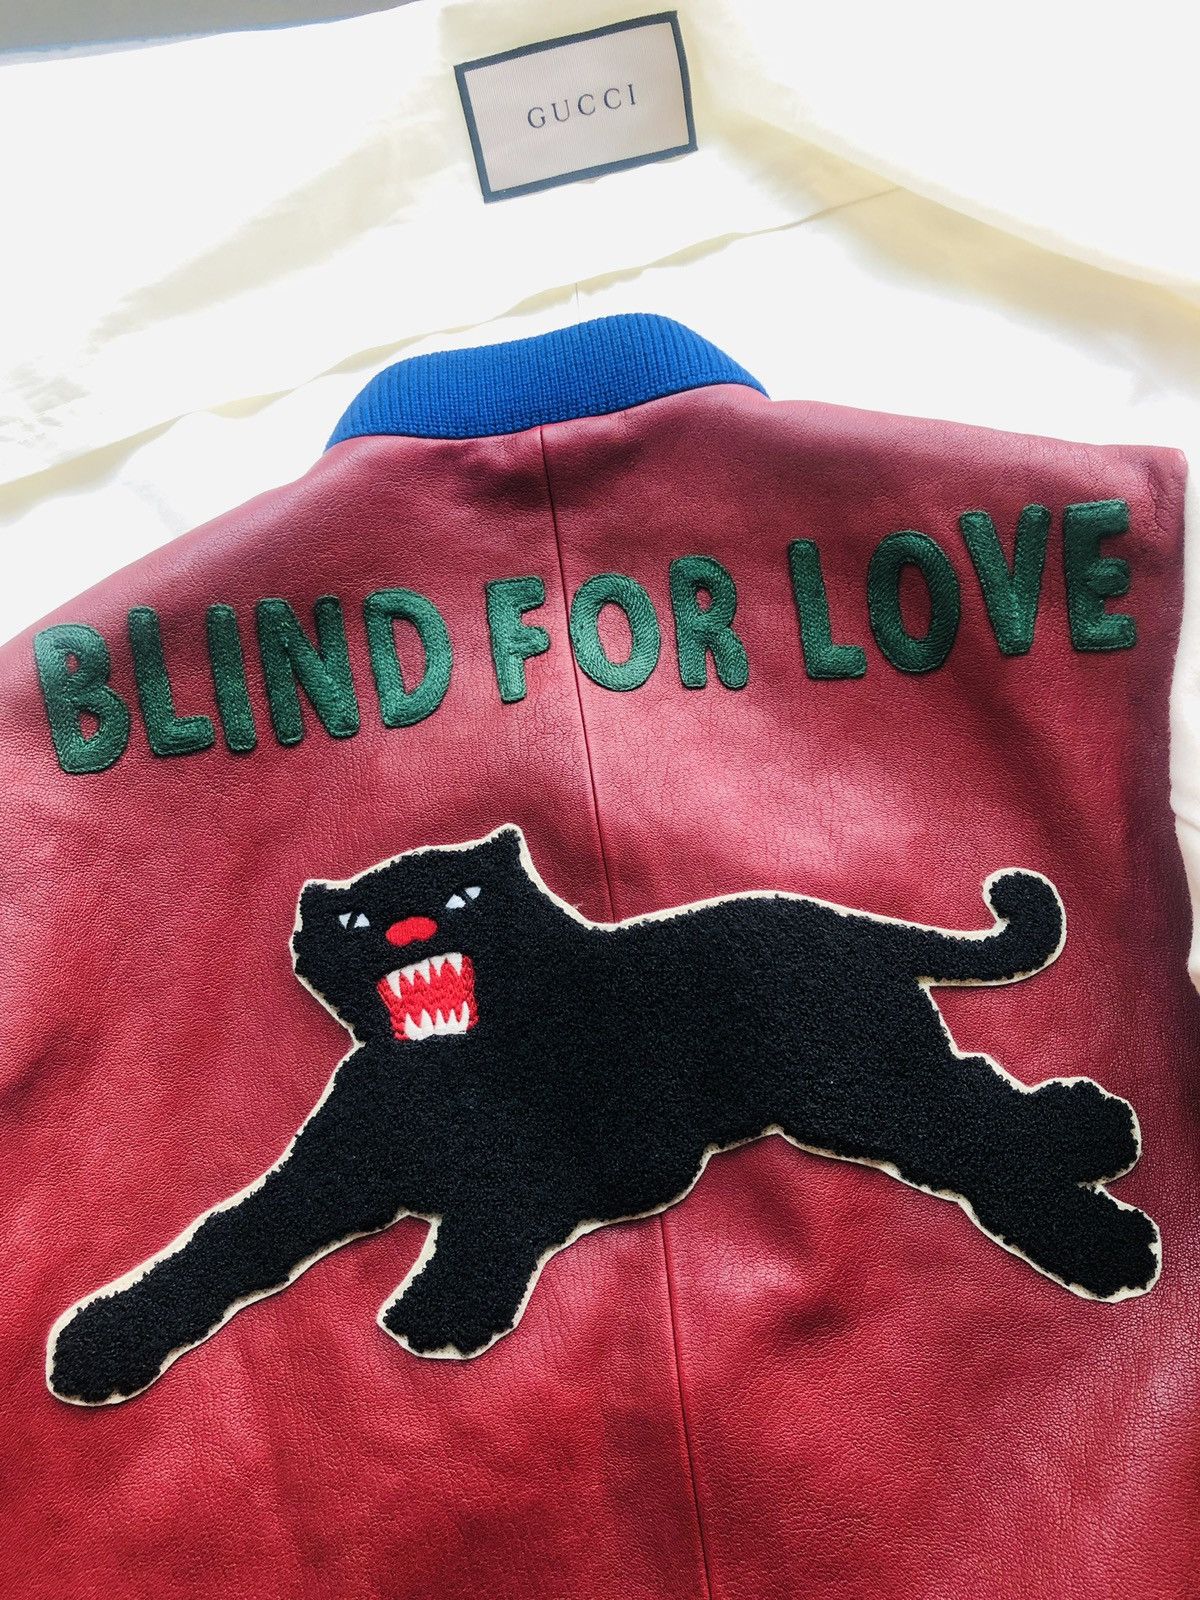 Gucci Blind For Love Varsity Bomber Jacket Size US S / EU 44-46 / 1 - 6 Thumbnail